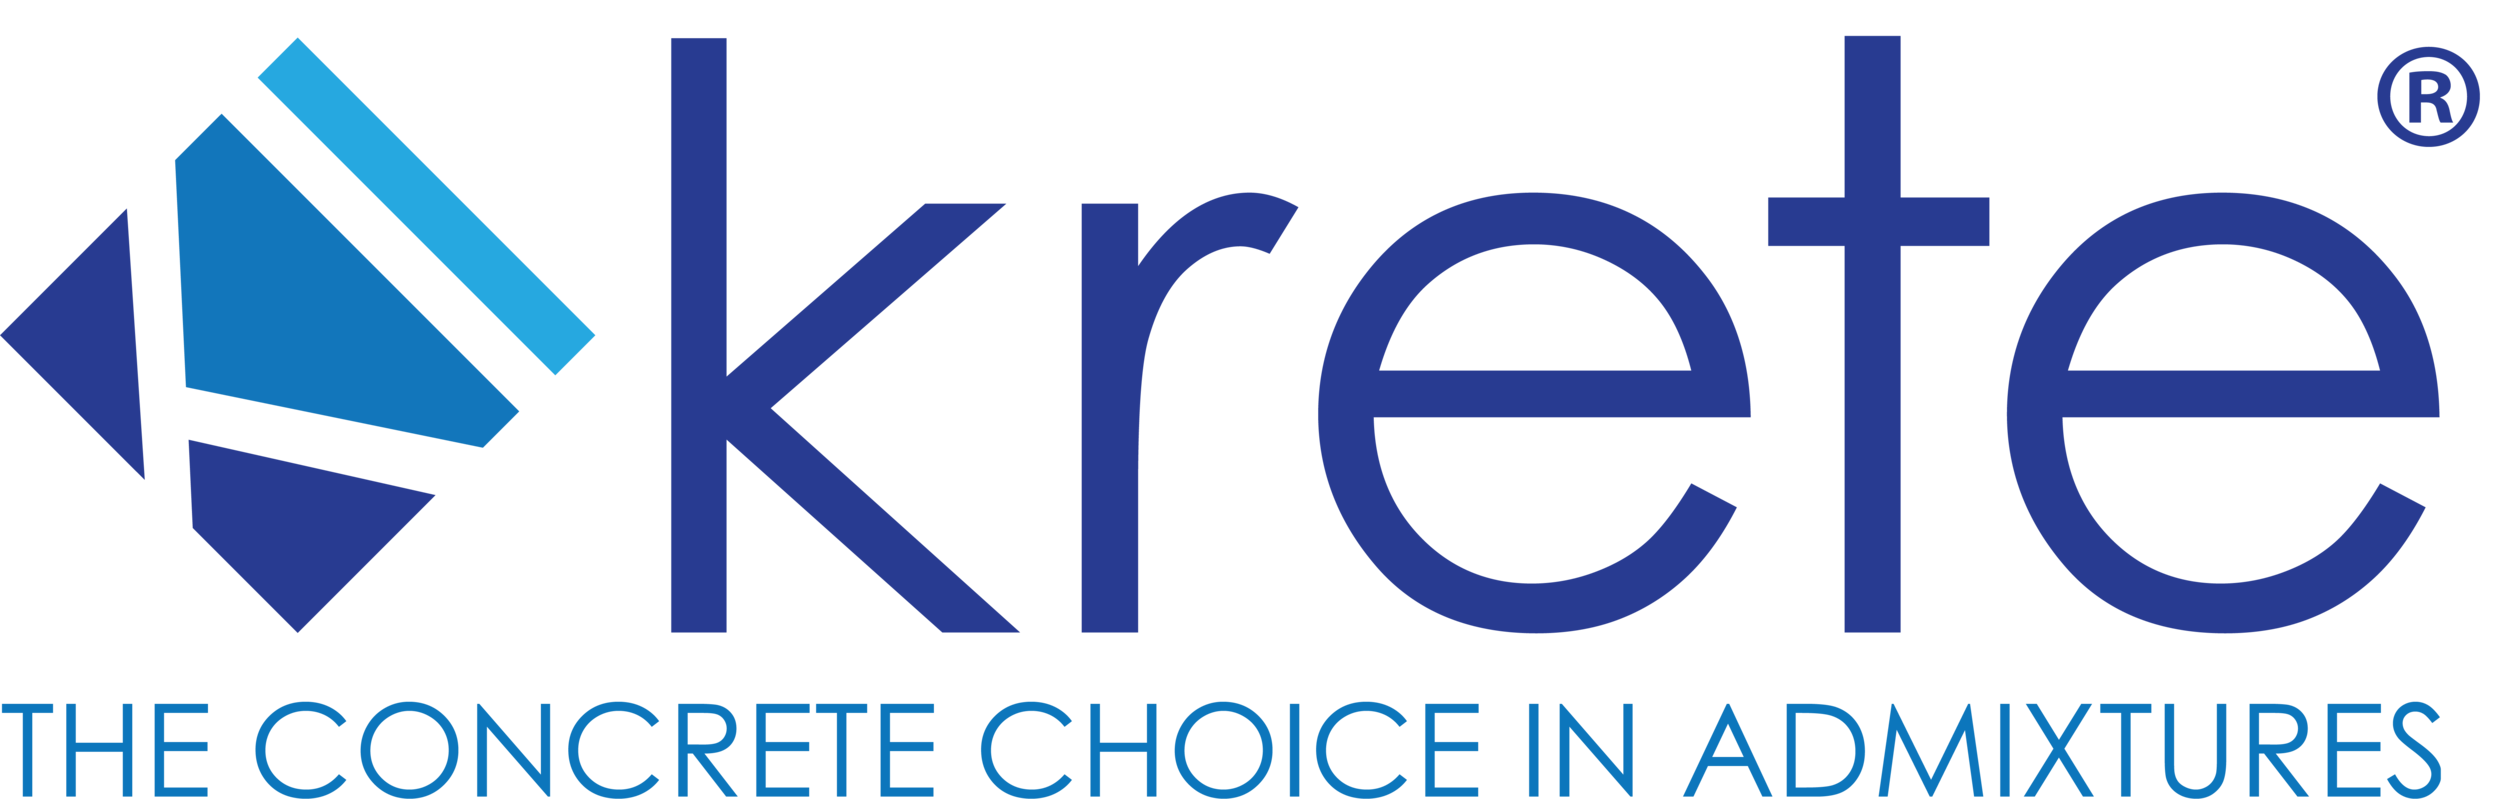 Krete (New) Logo_Slogan_24.png